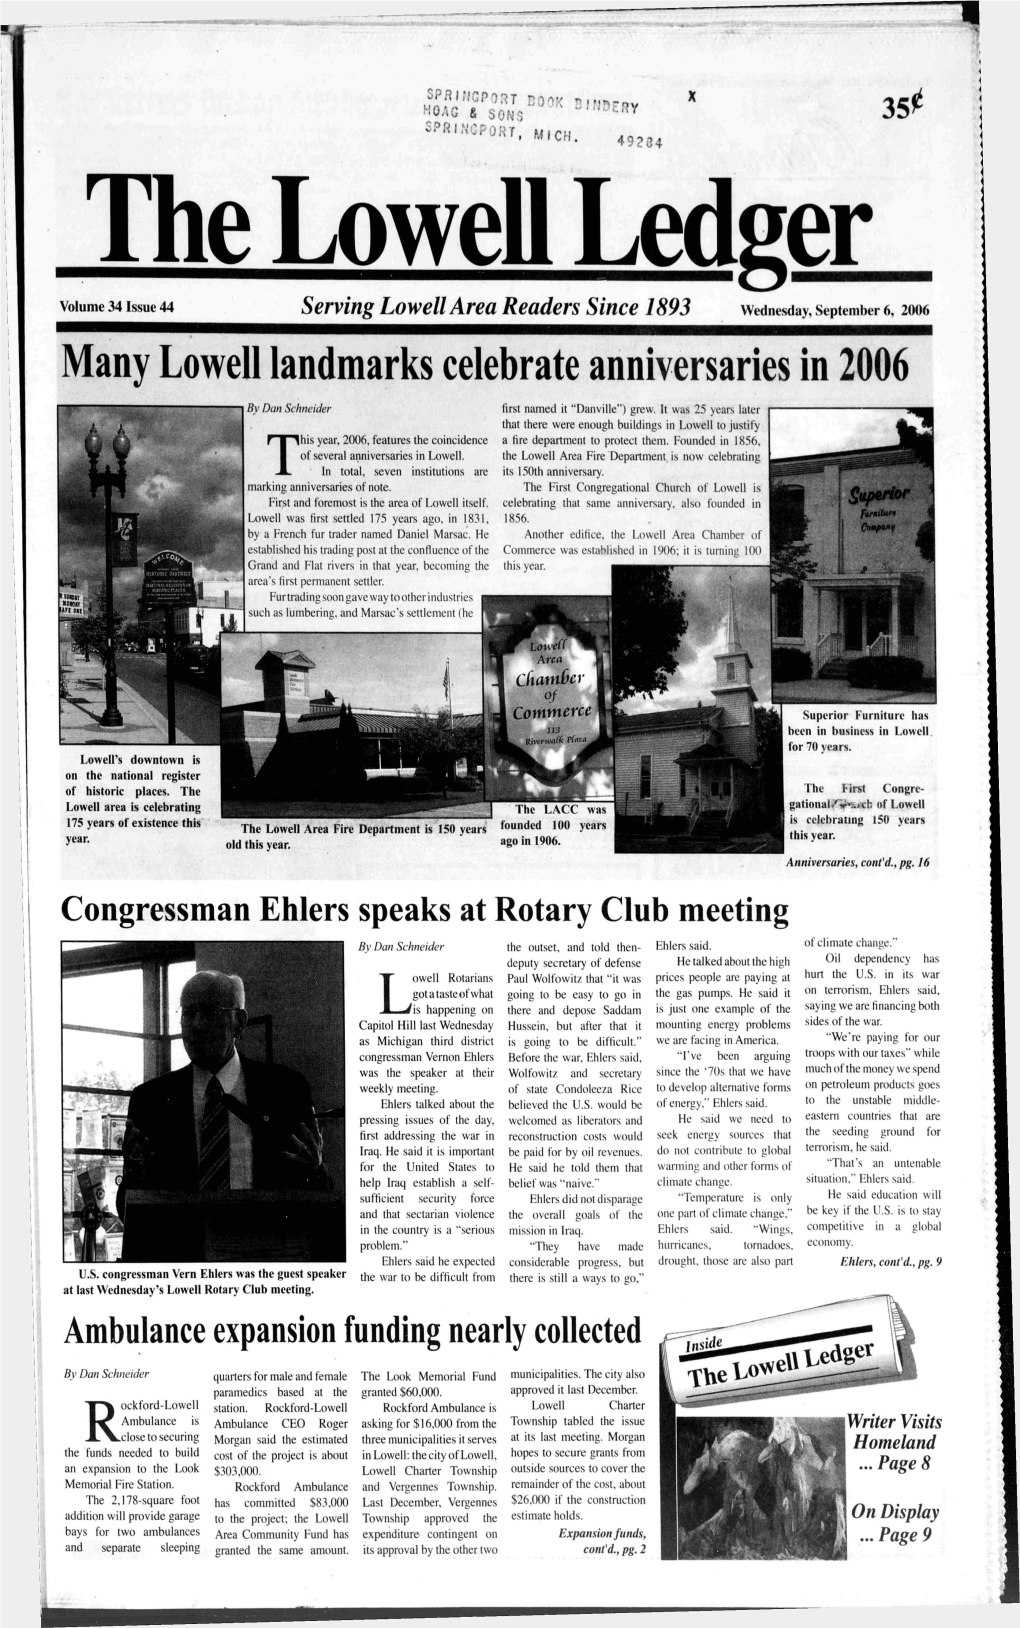 Many Lowell Landmarks Celebrate Anniversaries in 2006